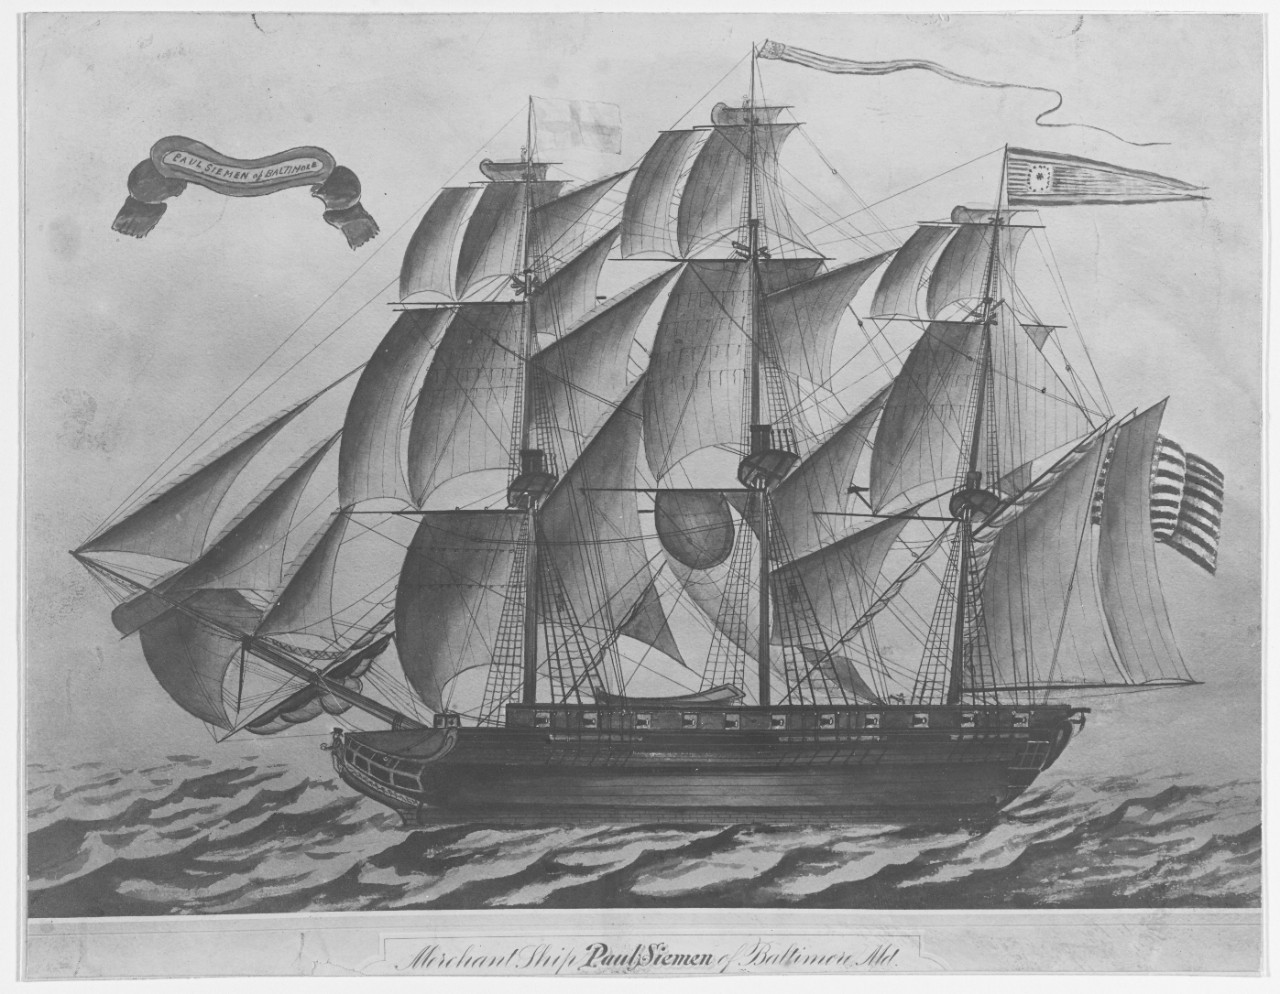 Painting of Merchant Ship PAUL SIEMEN, of Baltimore, Maryland, 1800-1803. 